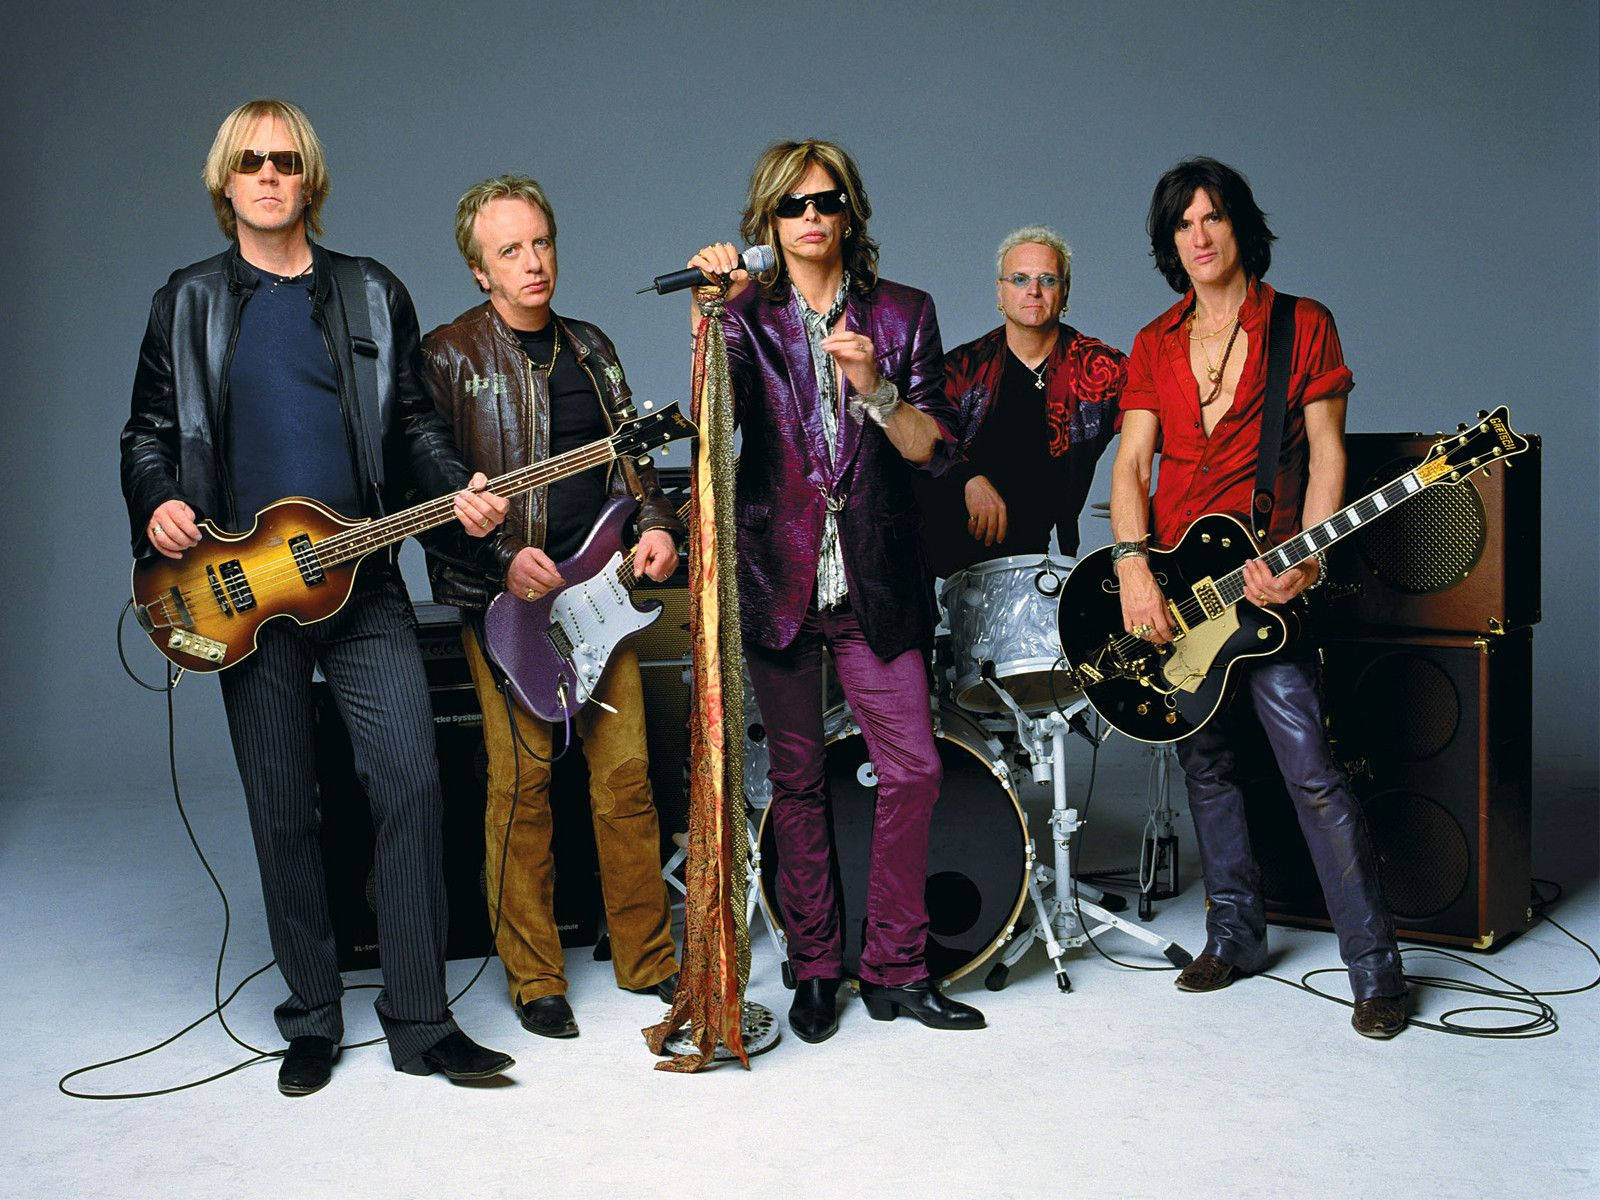 Sesiónde Fotos De Estudio De La Banda De Rock Aerosmith Fondo de pantalla